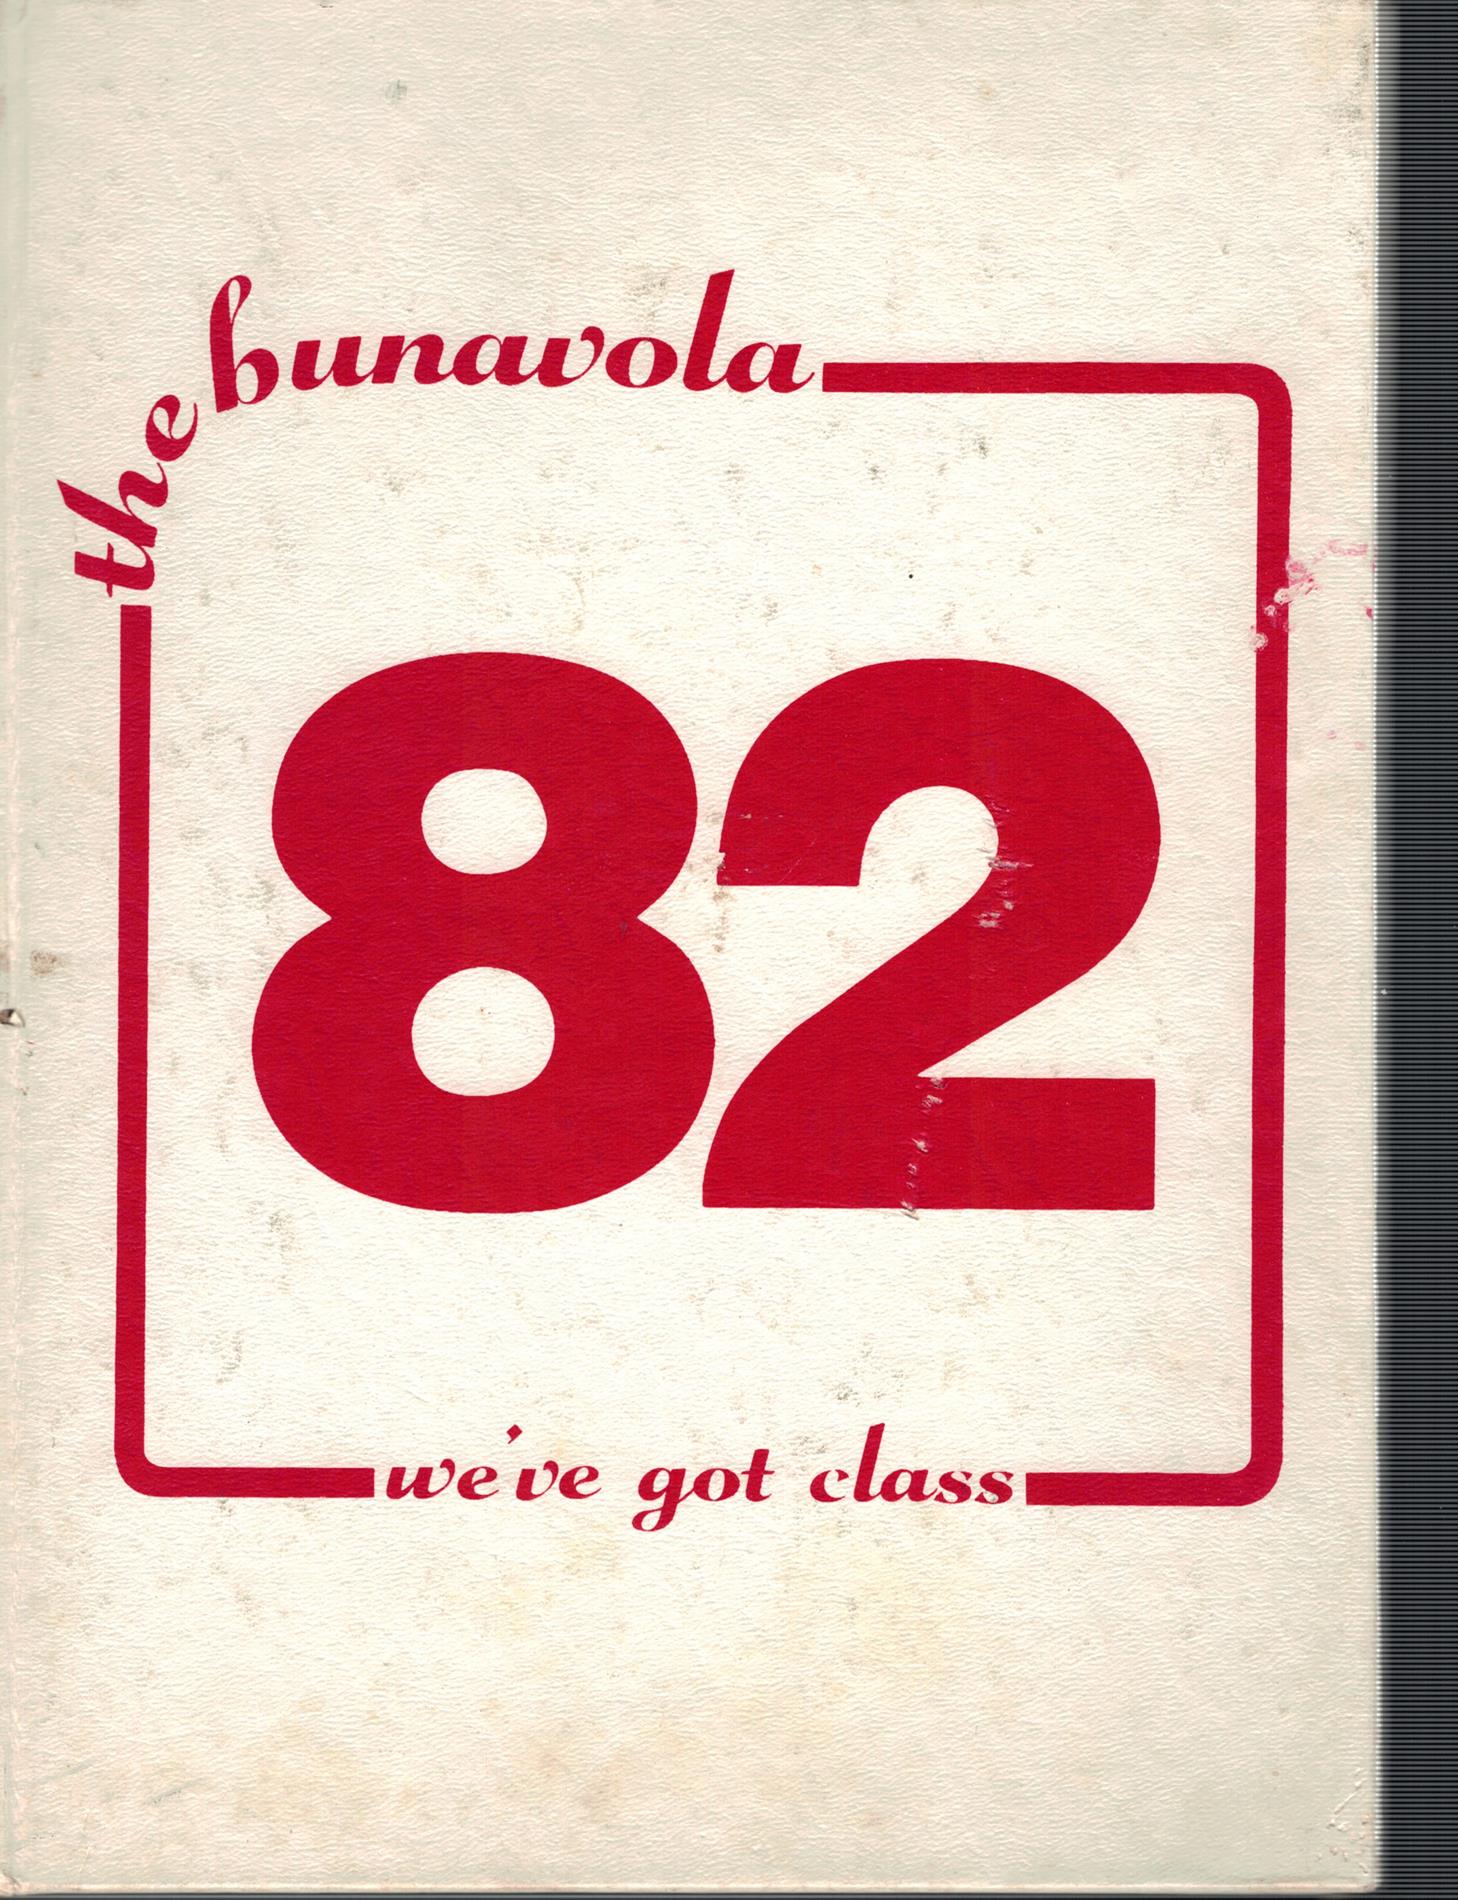 1982 Bunavola